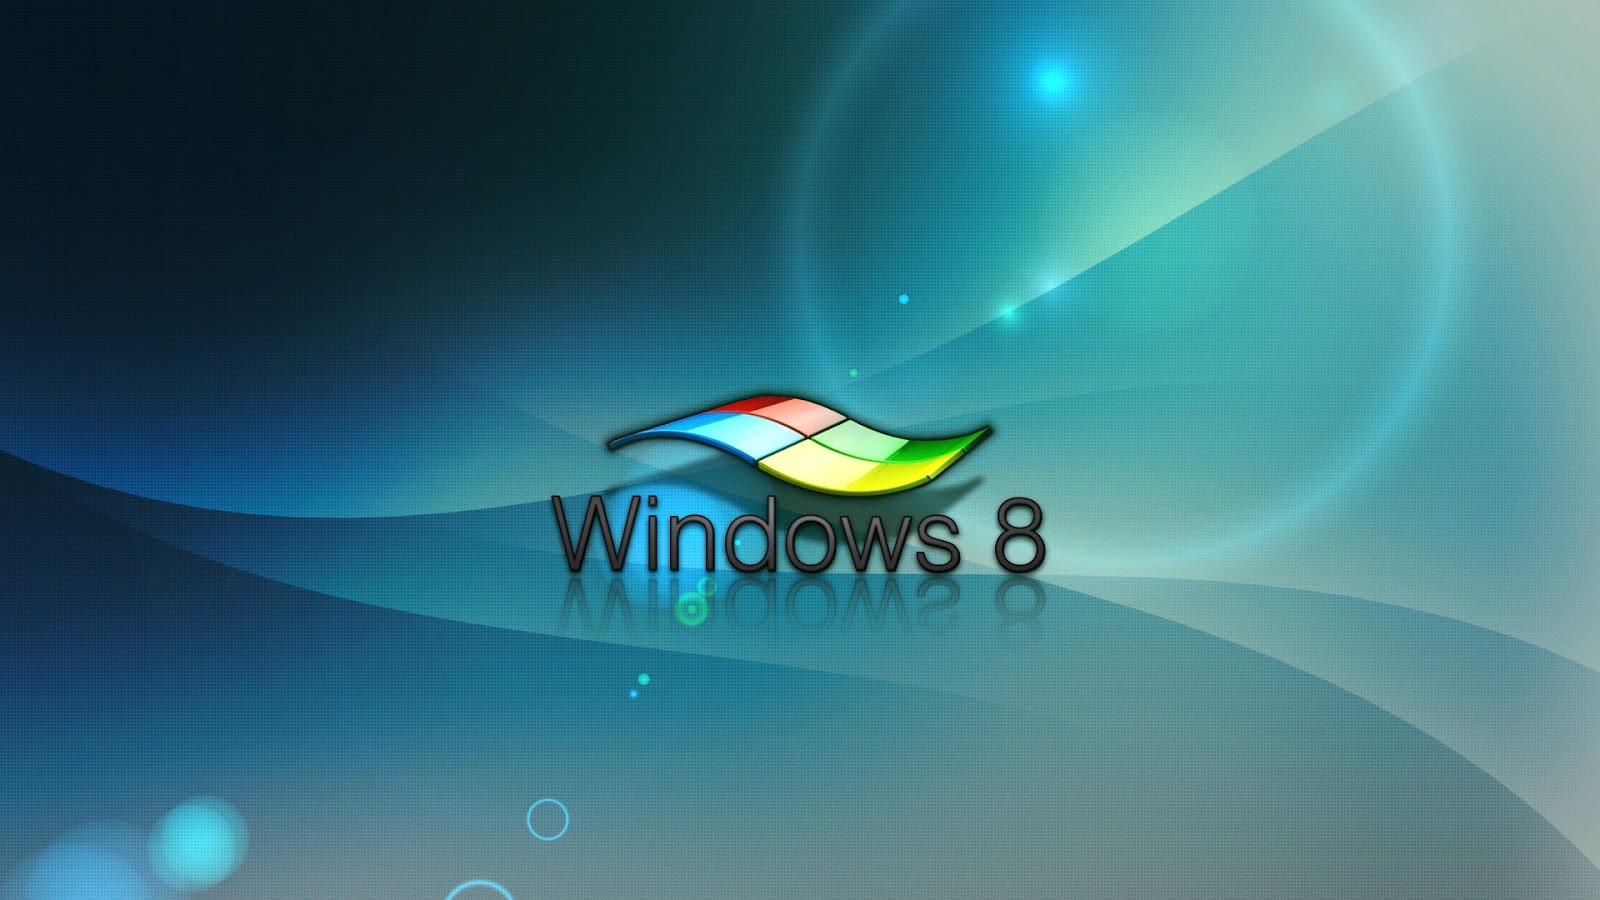 windows 8 wallpaper hd 1080p download #5